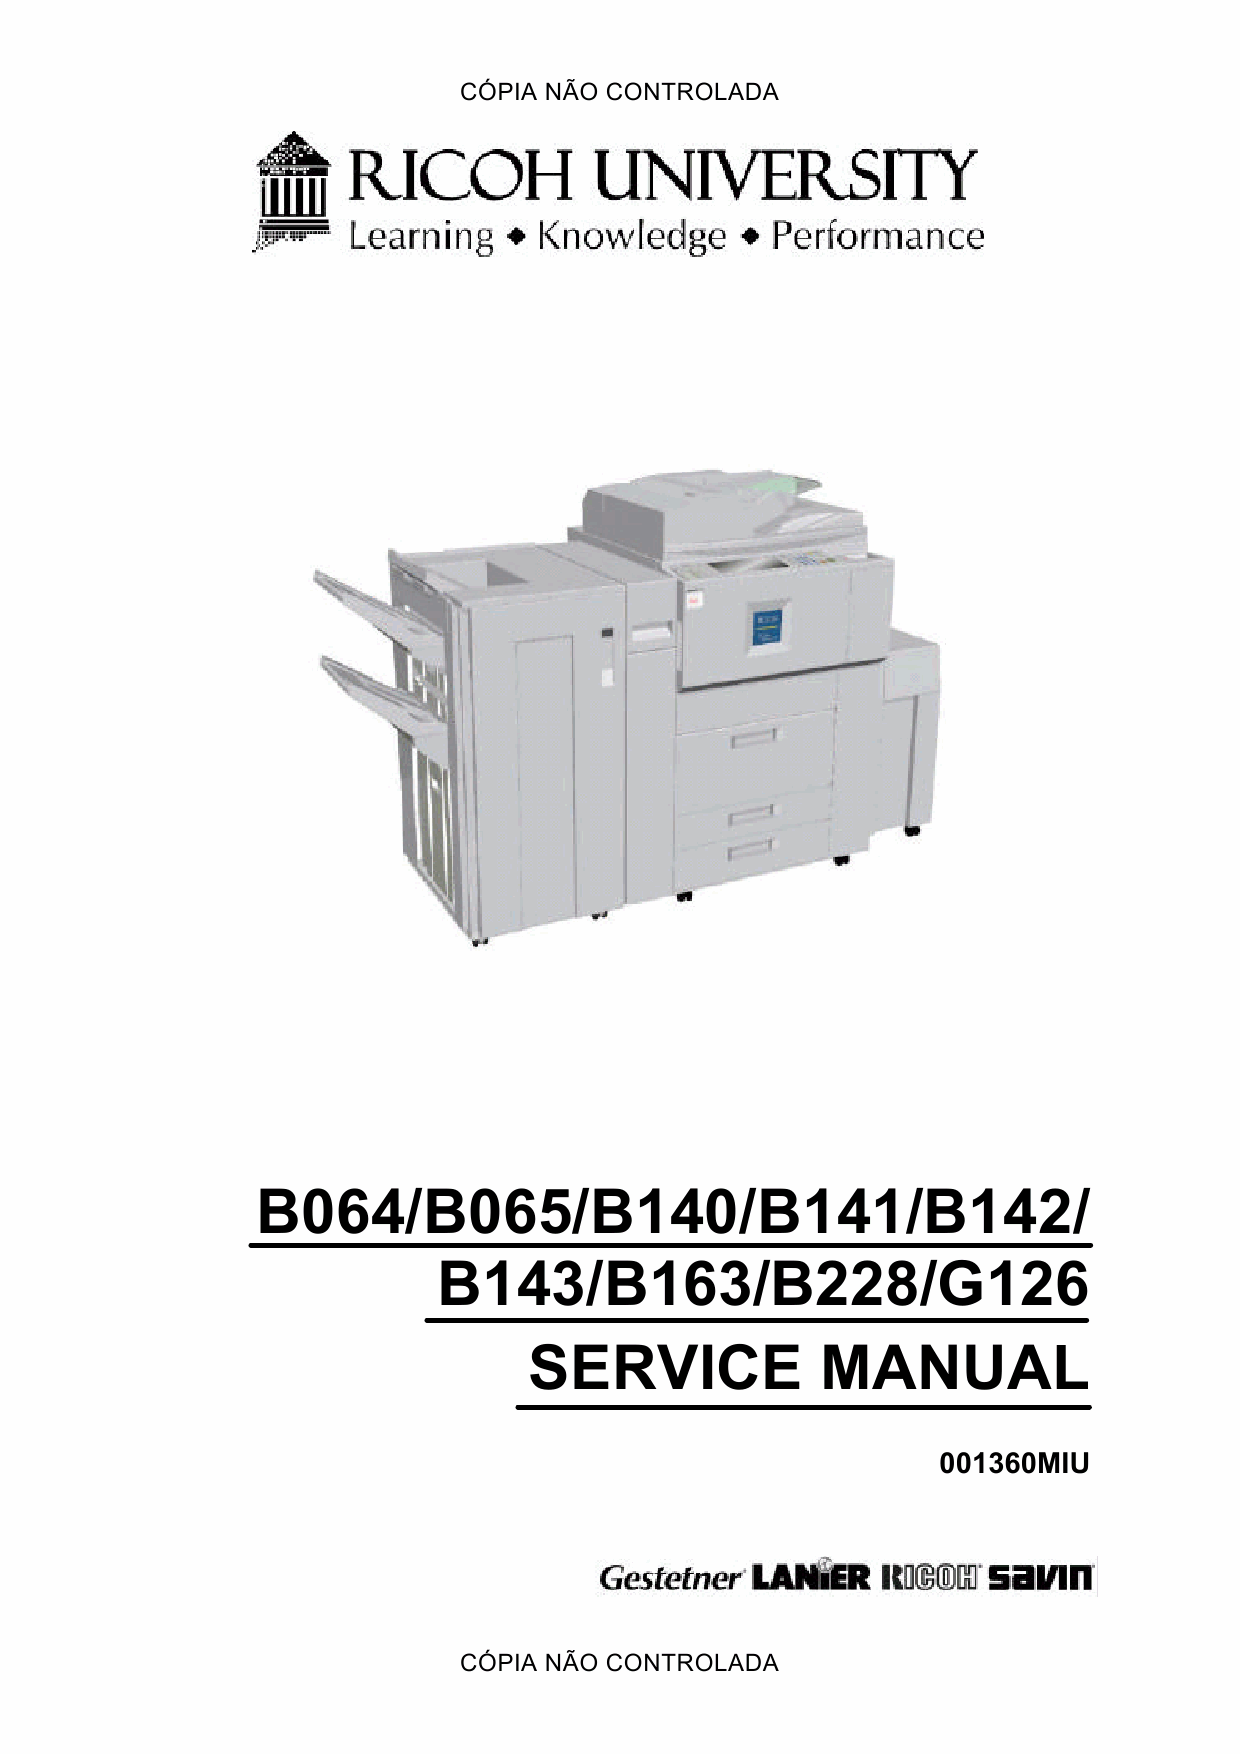 RICOH Aficio AP-900 G126 Service Manual-1